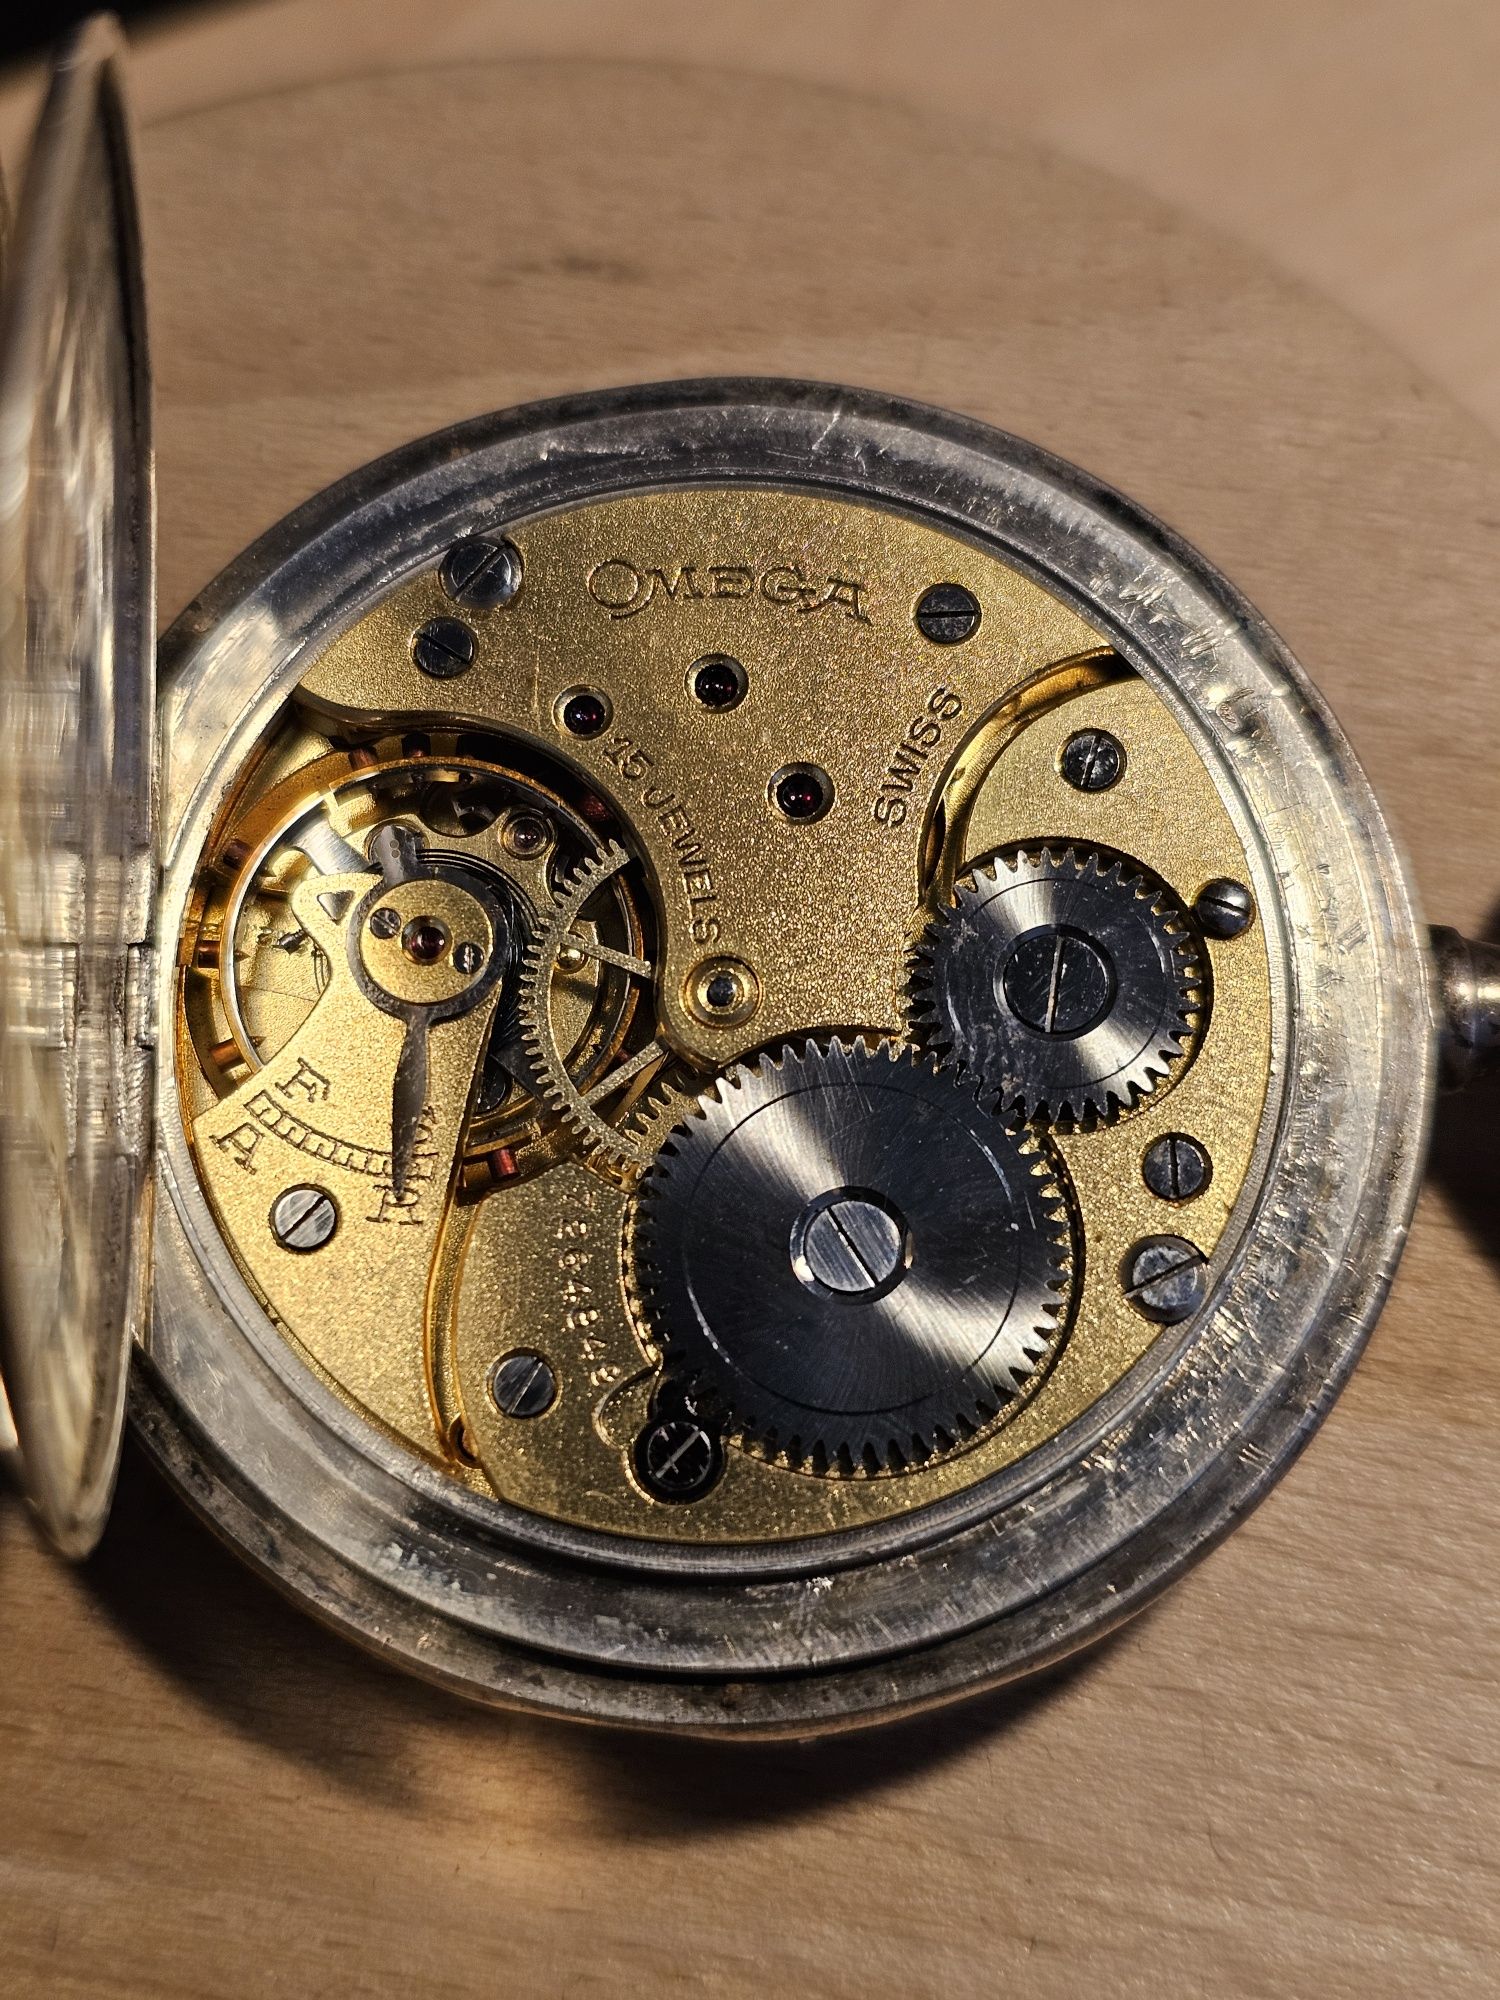 Zegarek kieszonkowy OMEGA 1934r srebro